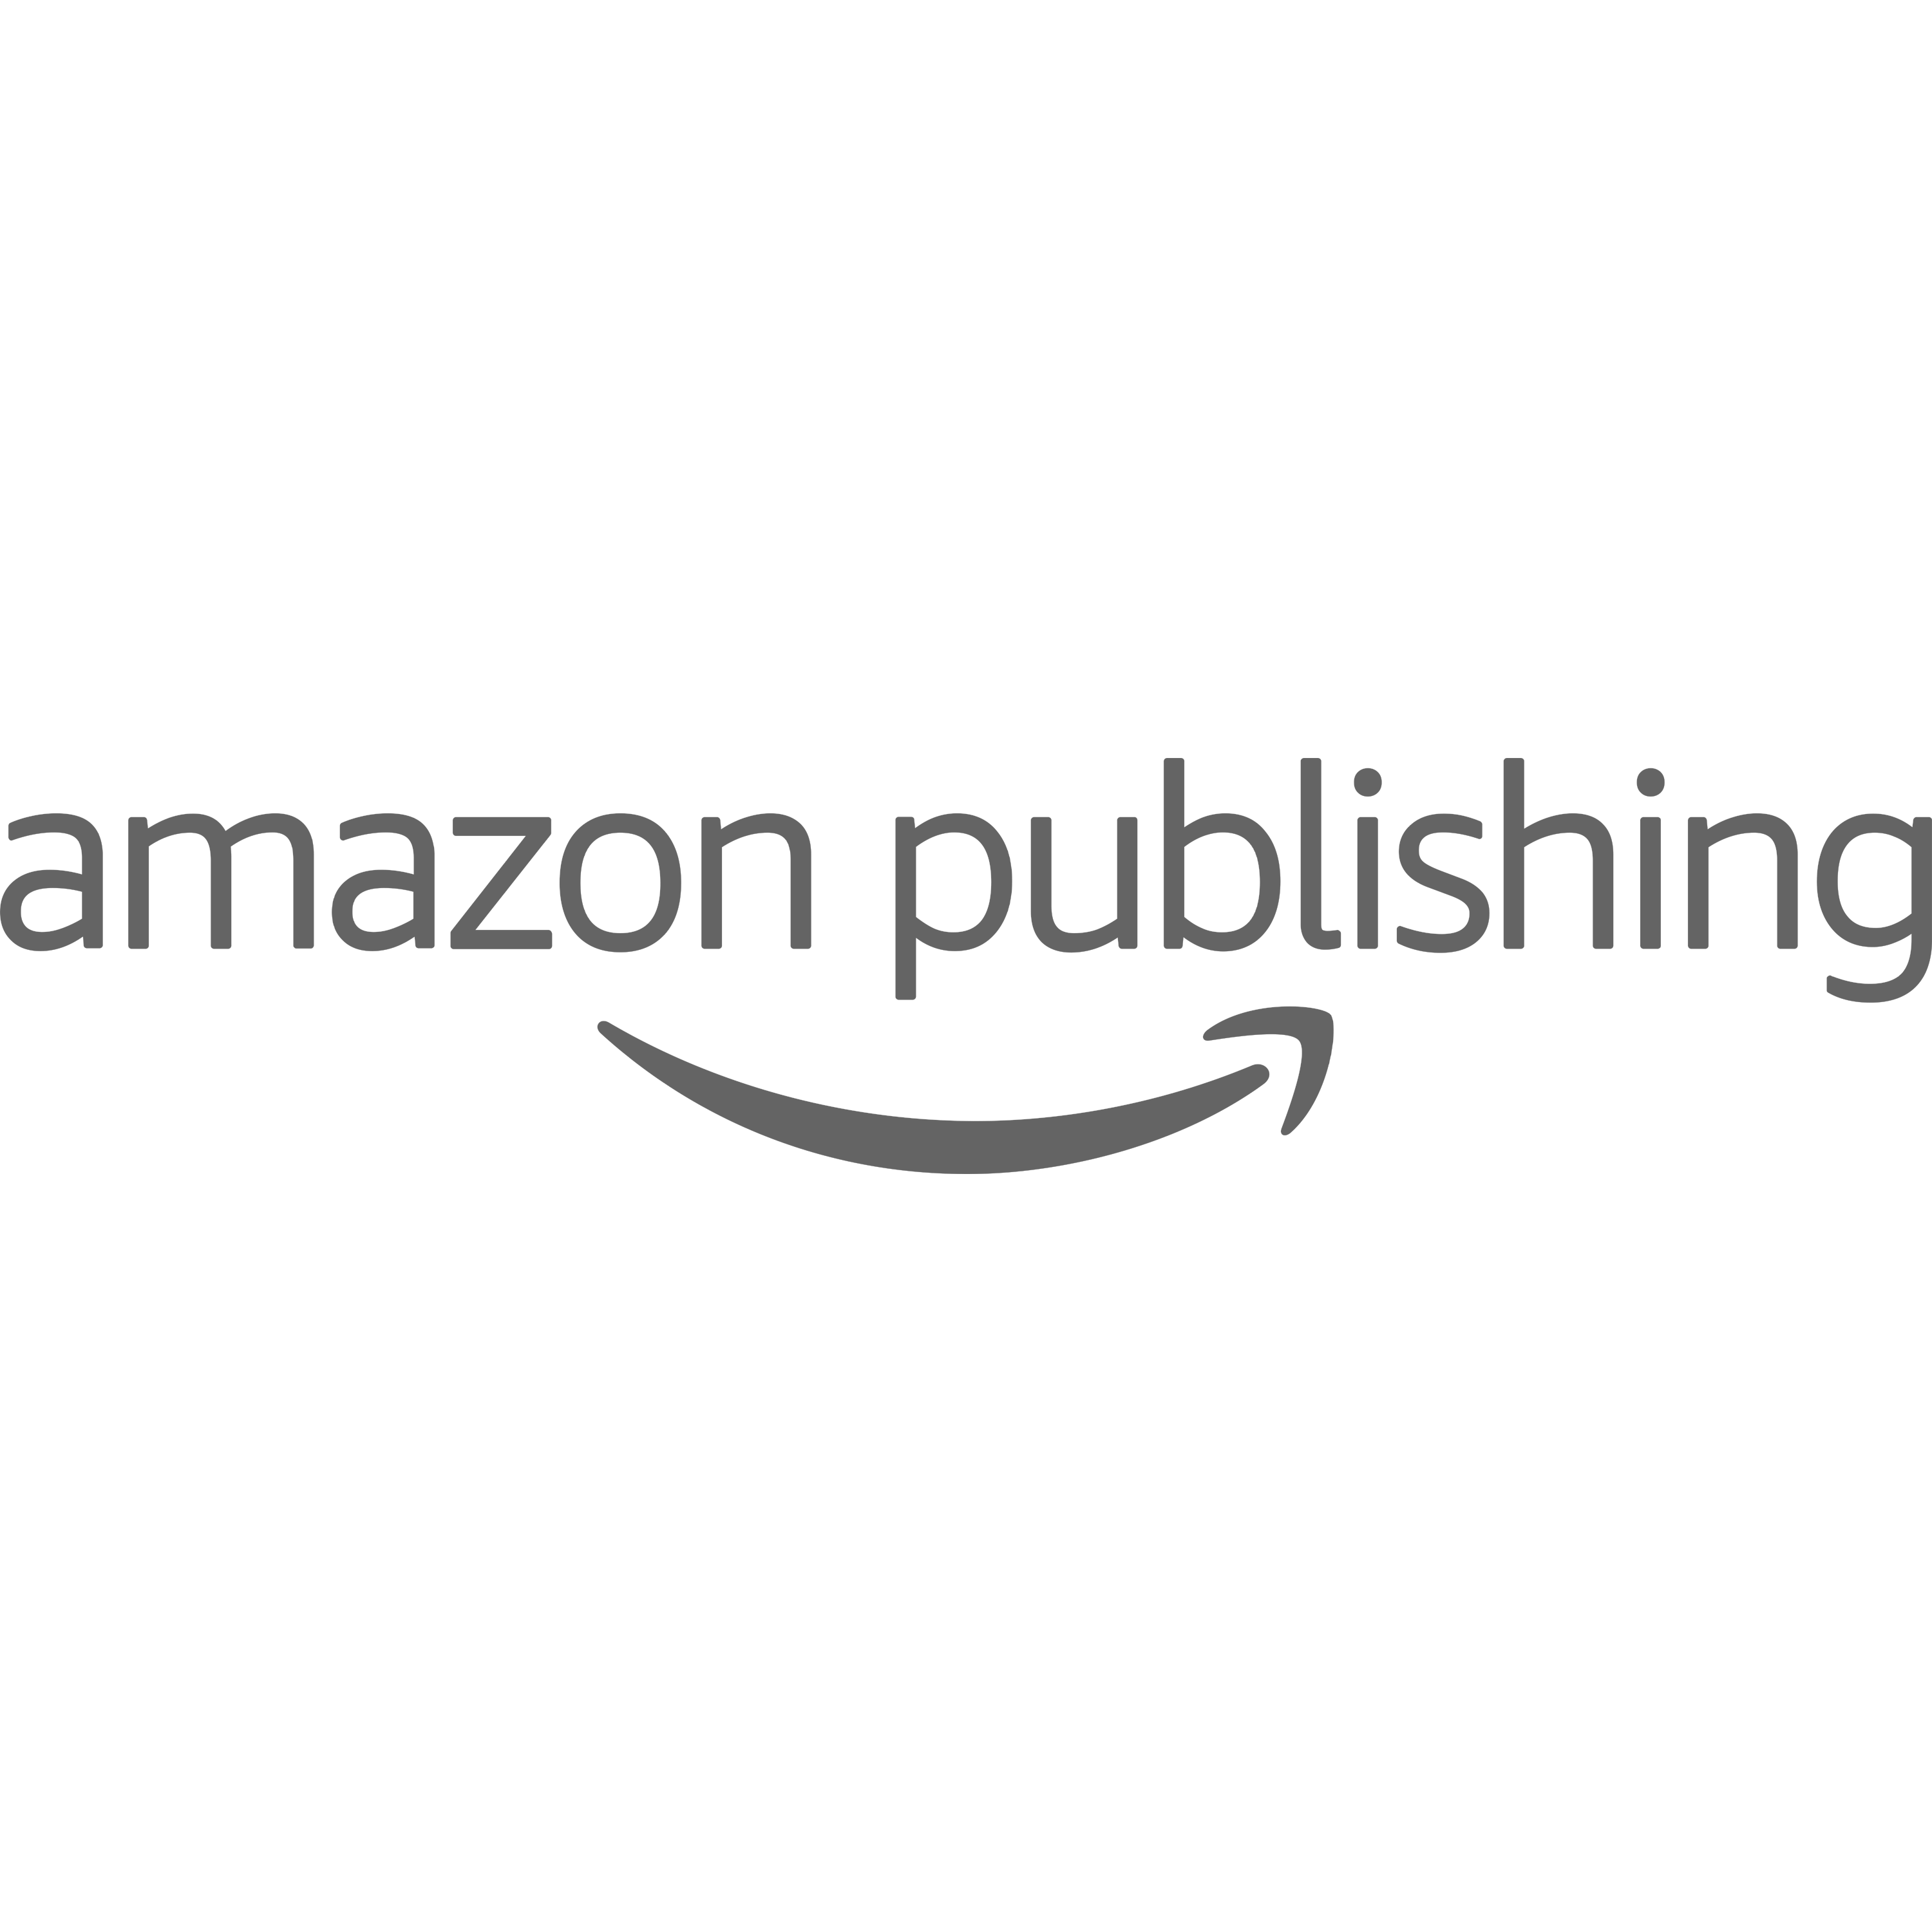 Amazon Publishing Logo Transparent Picture